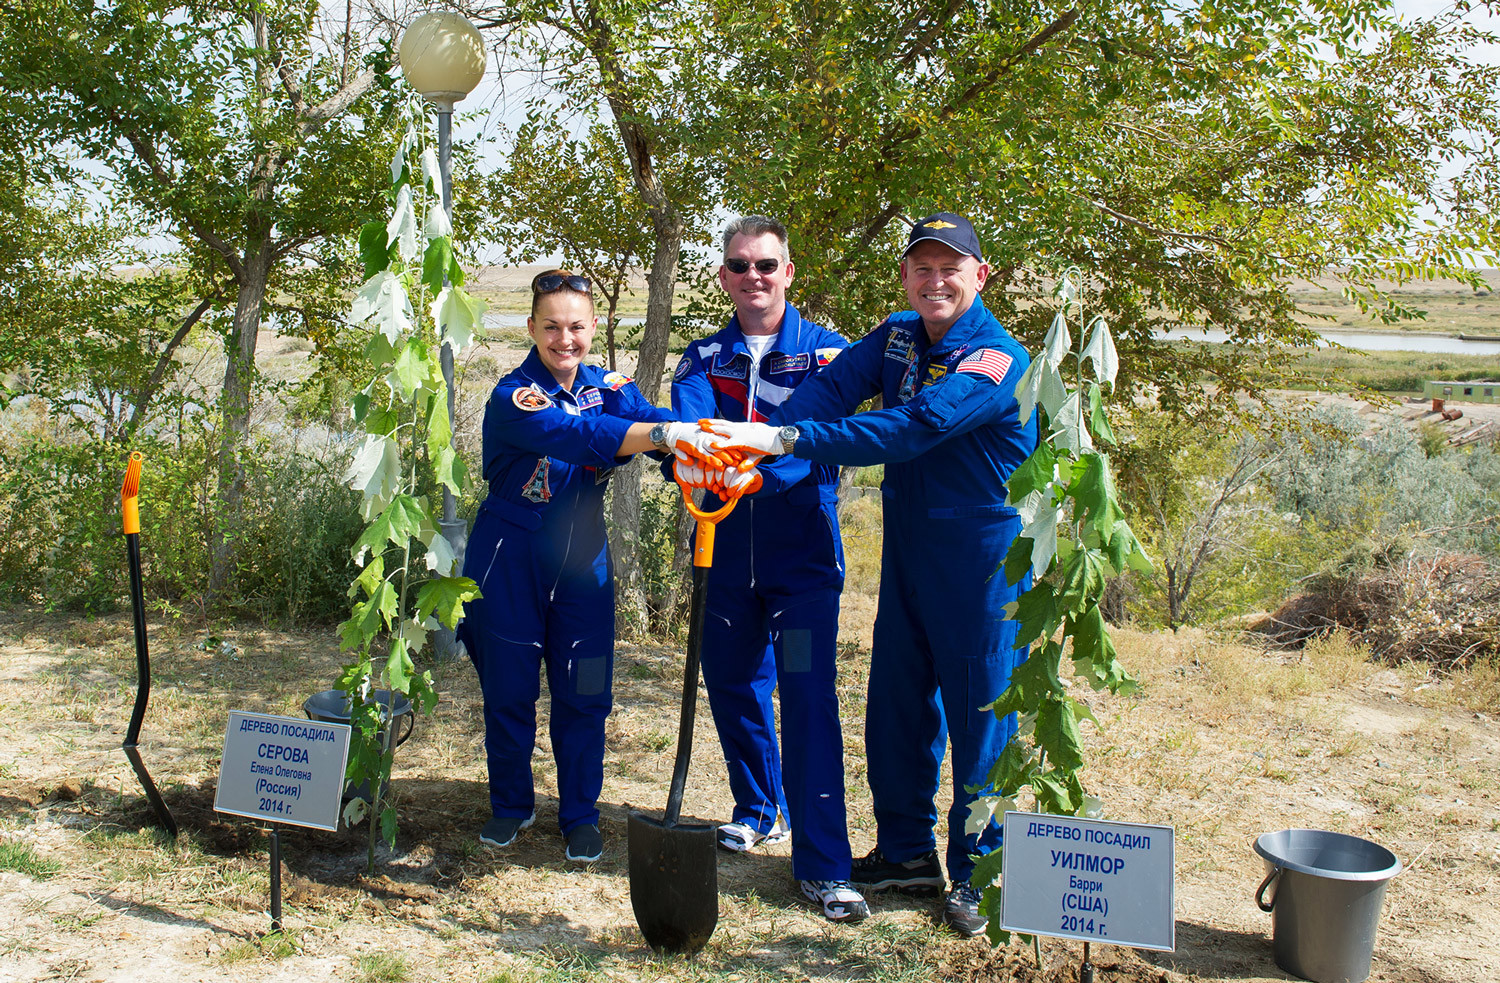 Руски космонаути Јелена Серова и Александар Самокутјајев и амерички астронаут Бери Вилмор саде дрво на космодрому Бајконур, септембар 2014. 